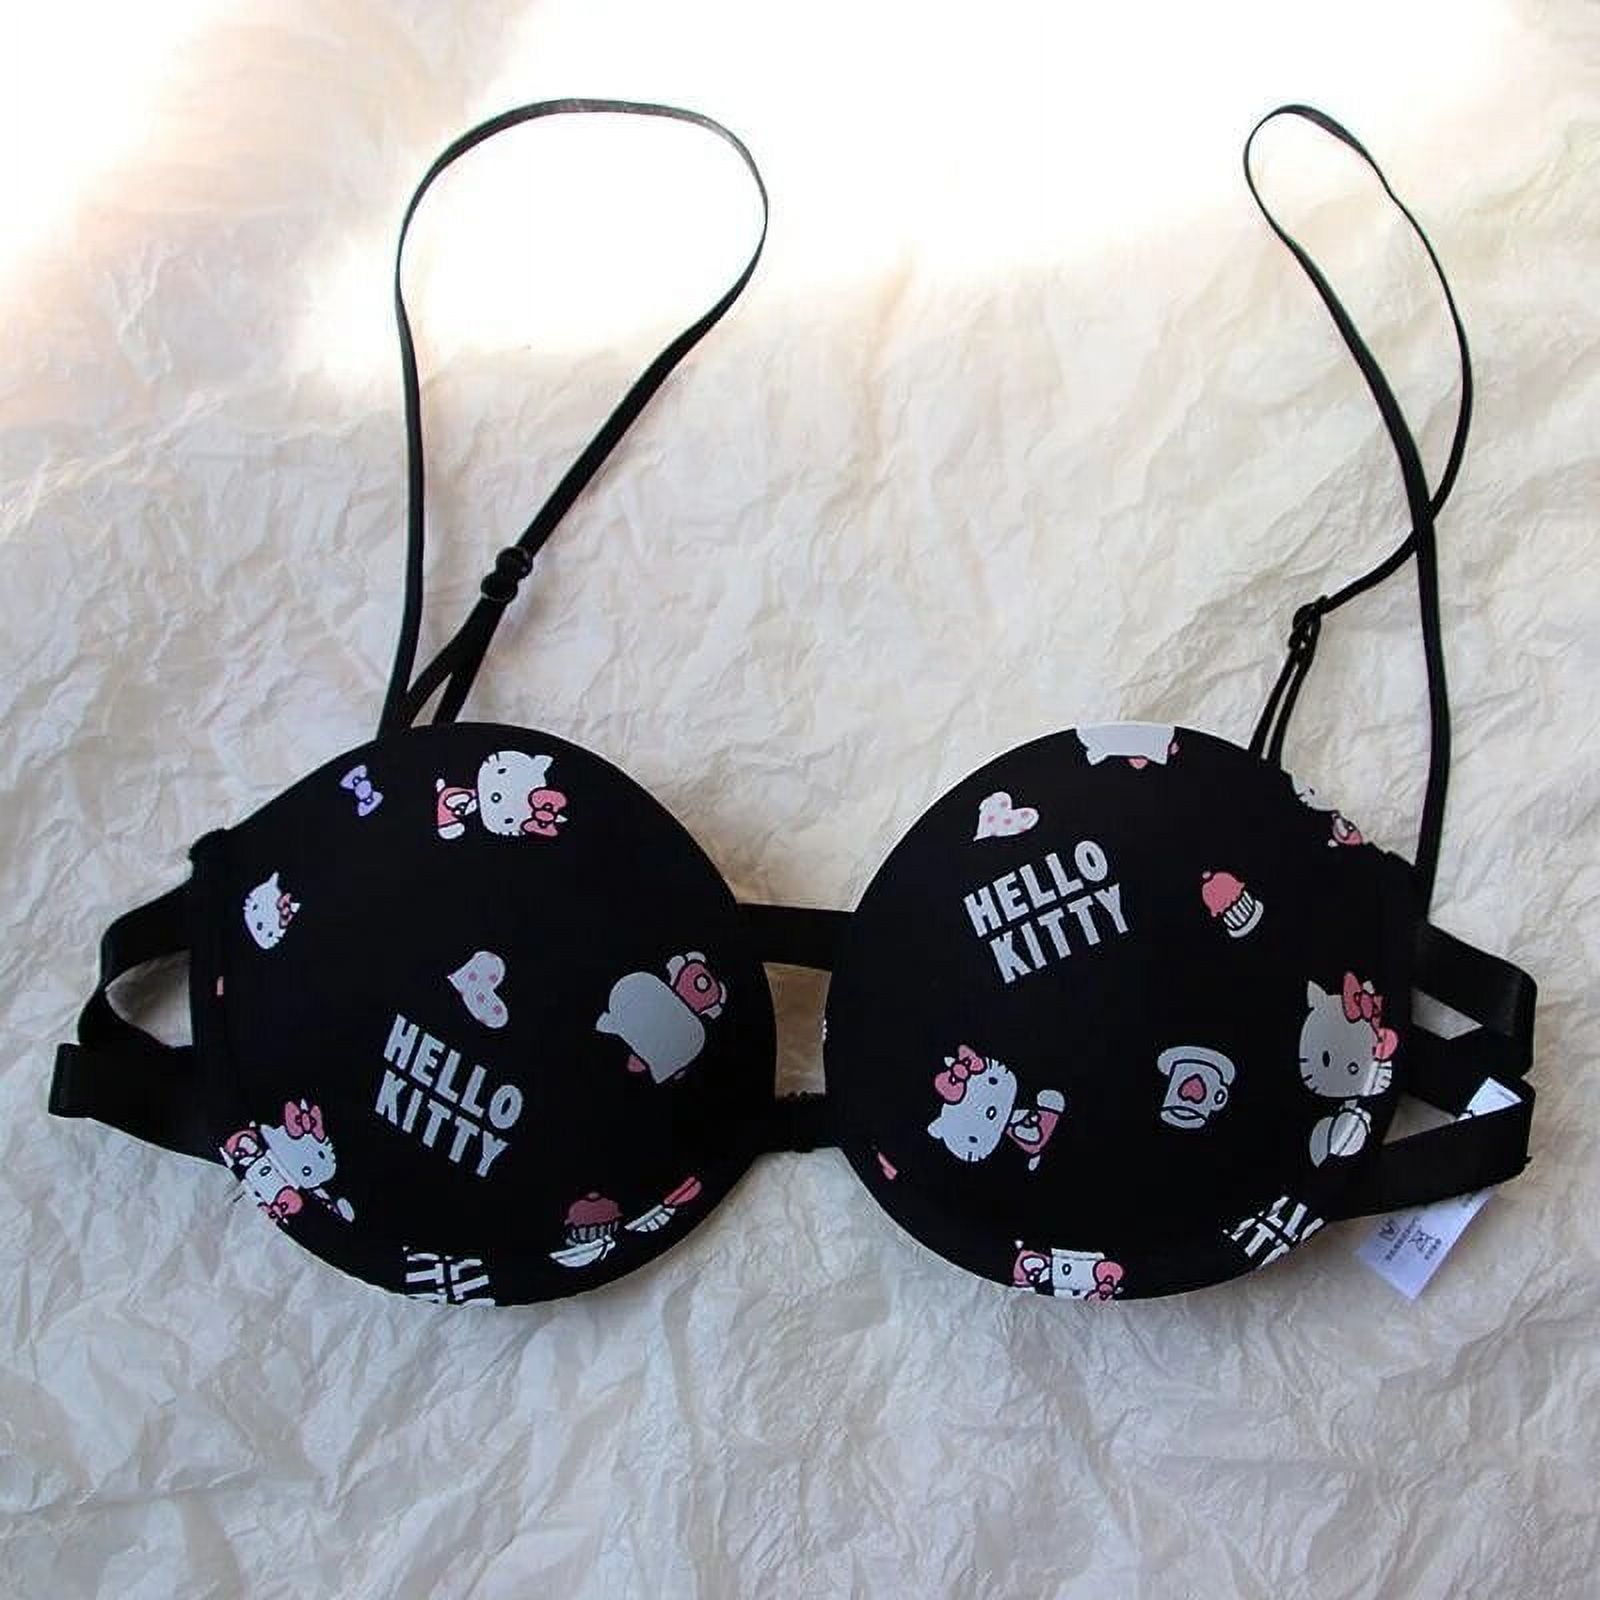 sanrio push up bra set size 30-38 price 1050/- each set only bra